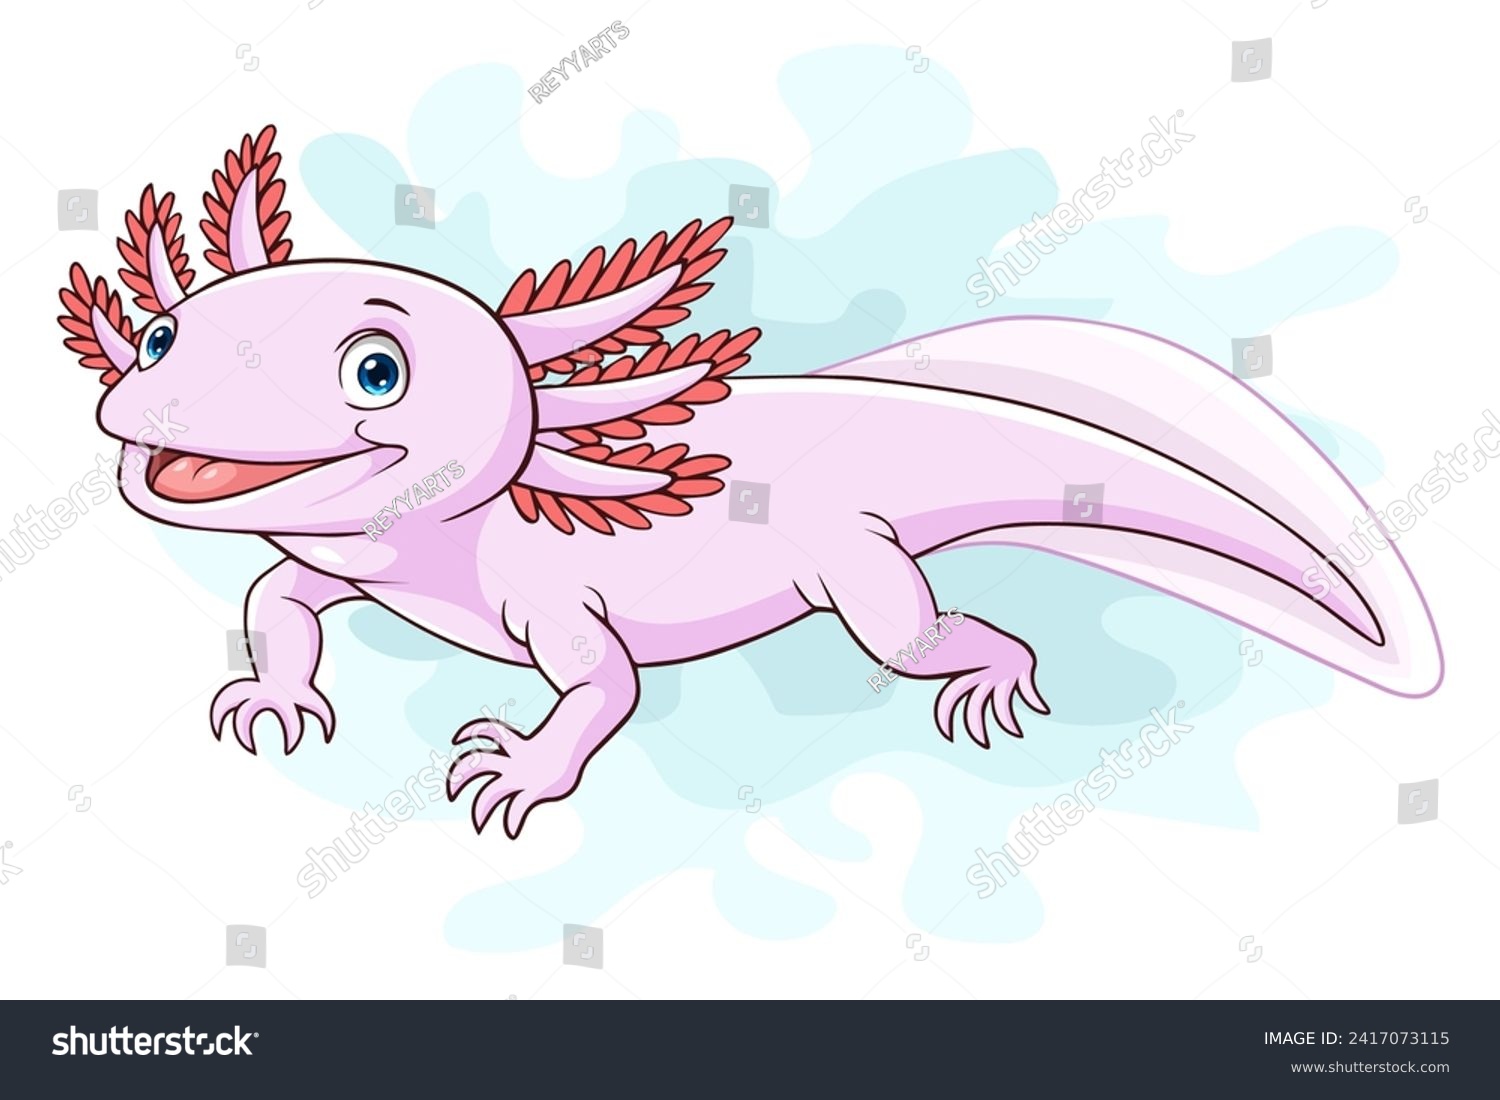 SVG of Cartoon axolotl on white background svg